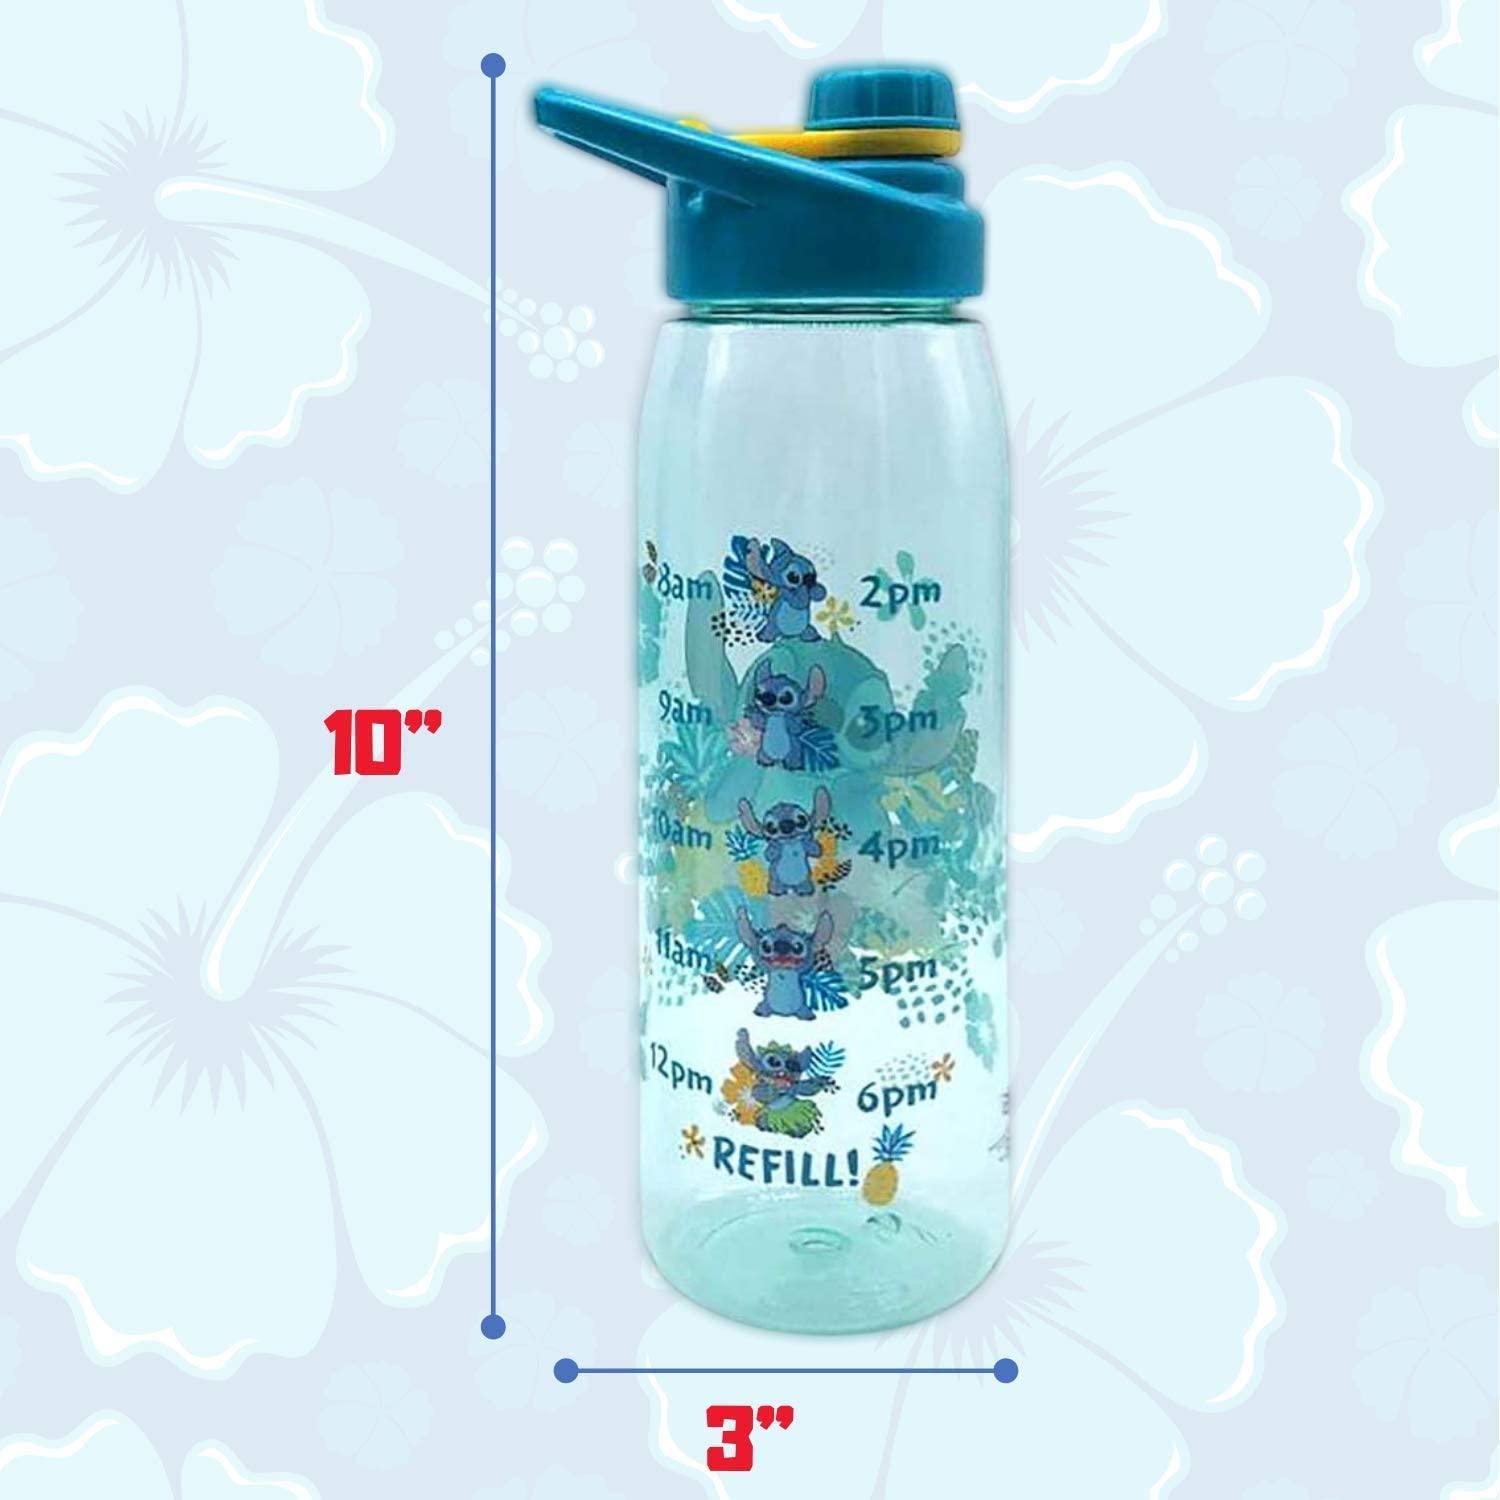 Disney Lilo and Stitch Tropical 28oz Tritan Water Bottle with Screw Lid